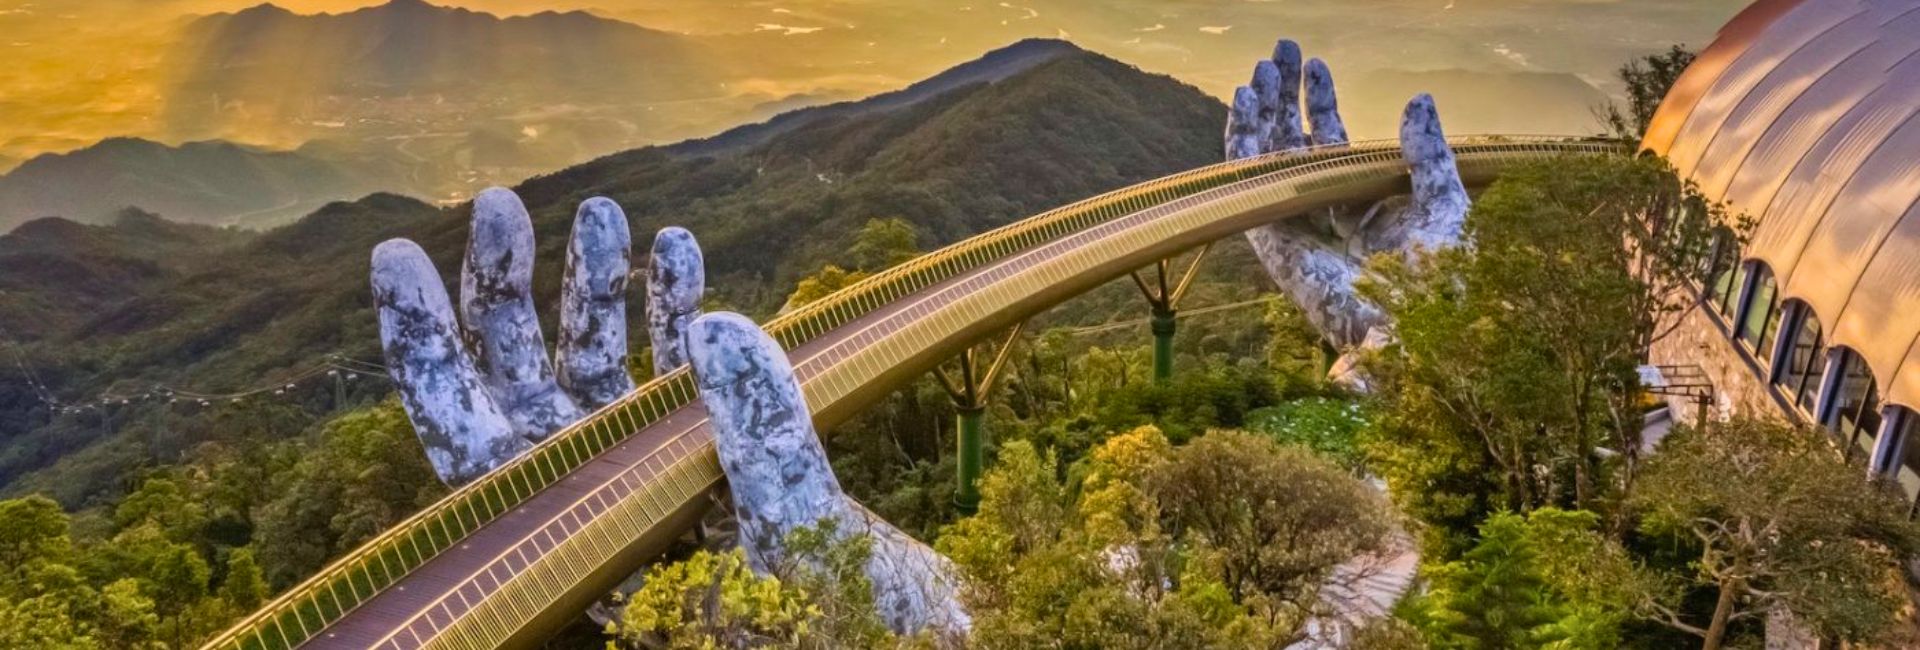 Golden Hands Bridge Danang  – An architectural marvel in central Vietnam